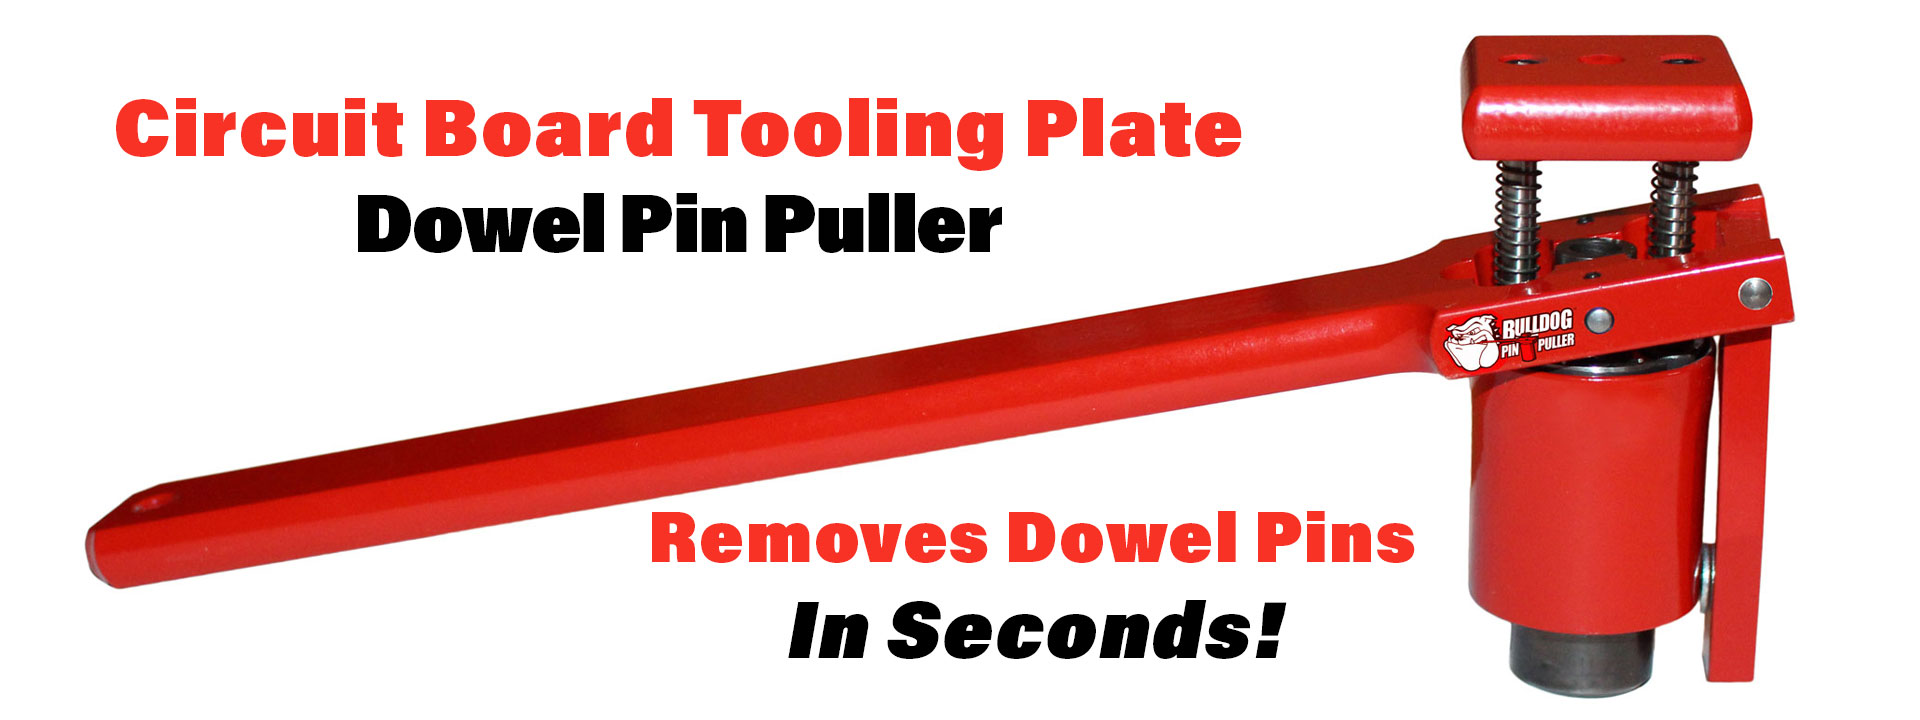 Circuit Board Dowel Pin Puller for Tooling Plates - Bulldog Pin Puller